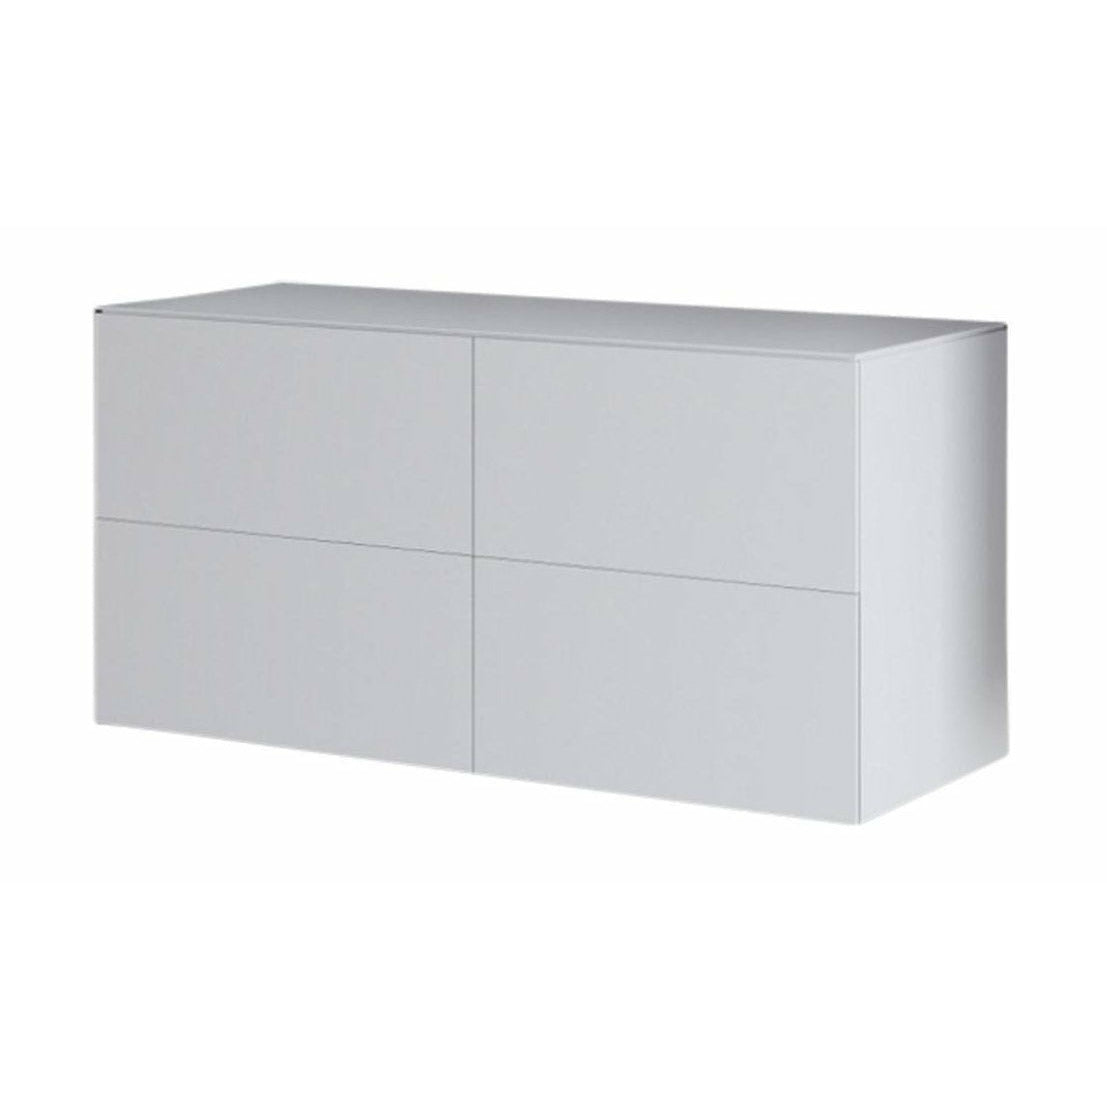 Copenhagen Bath Sq2 Double Cabinet With Countertop, L120 Cm